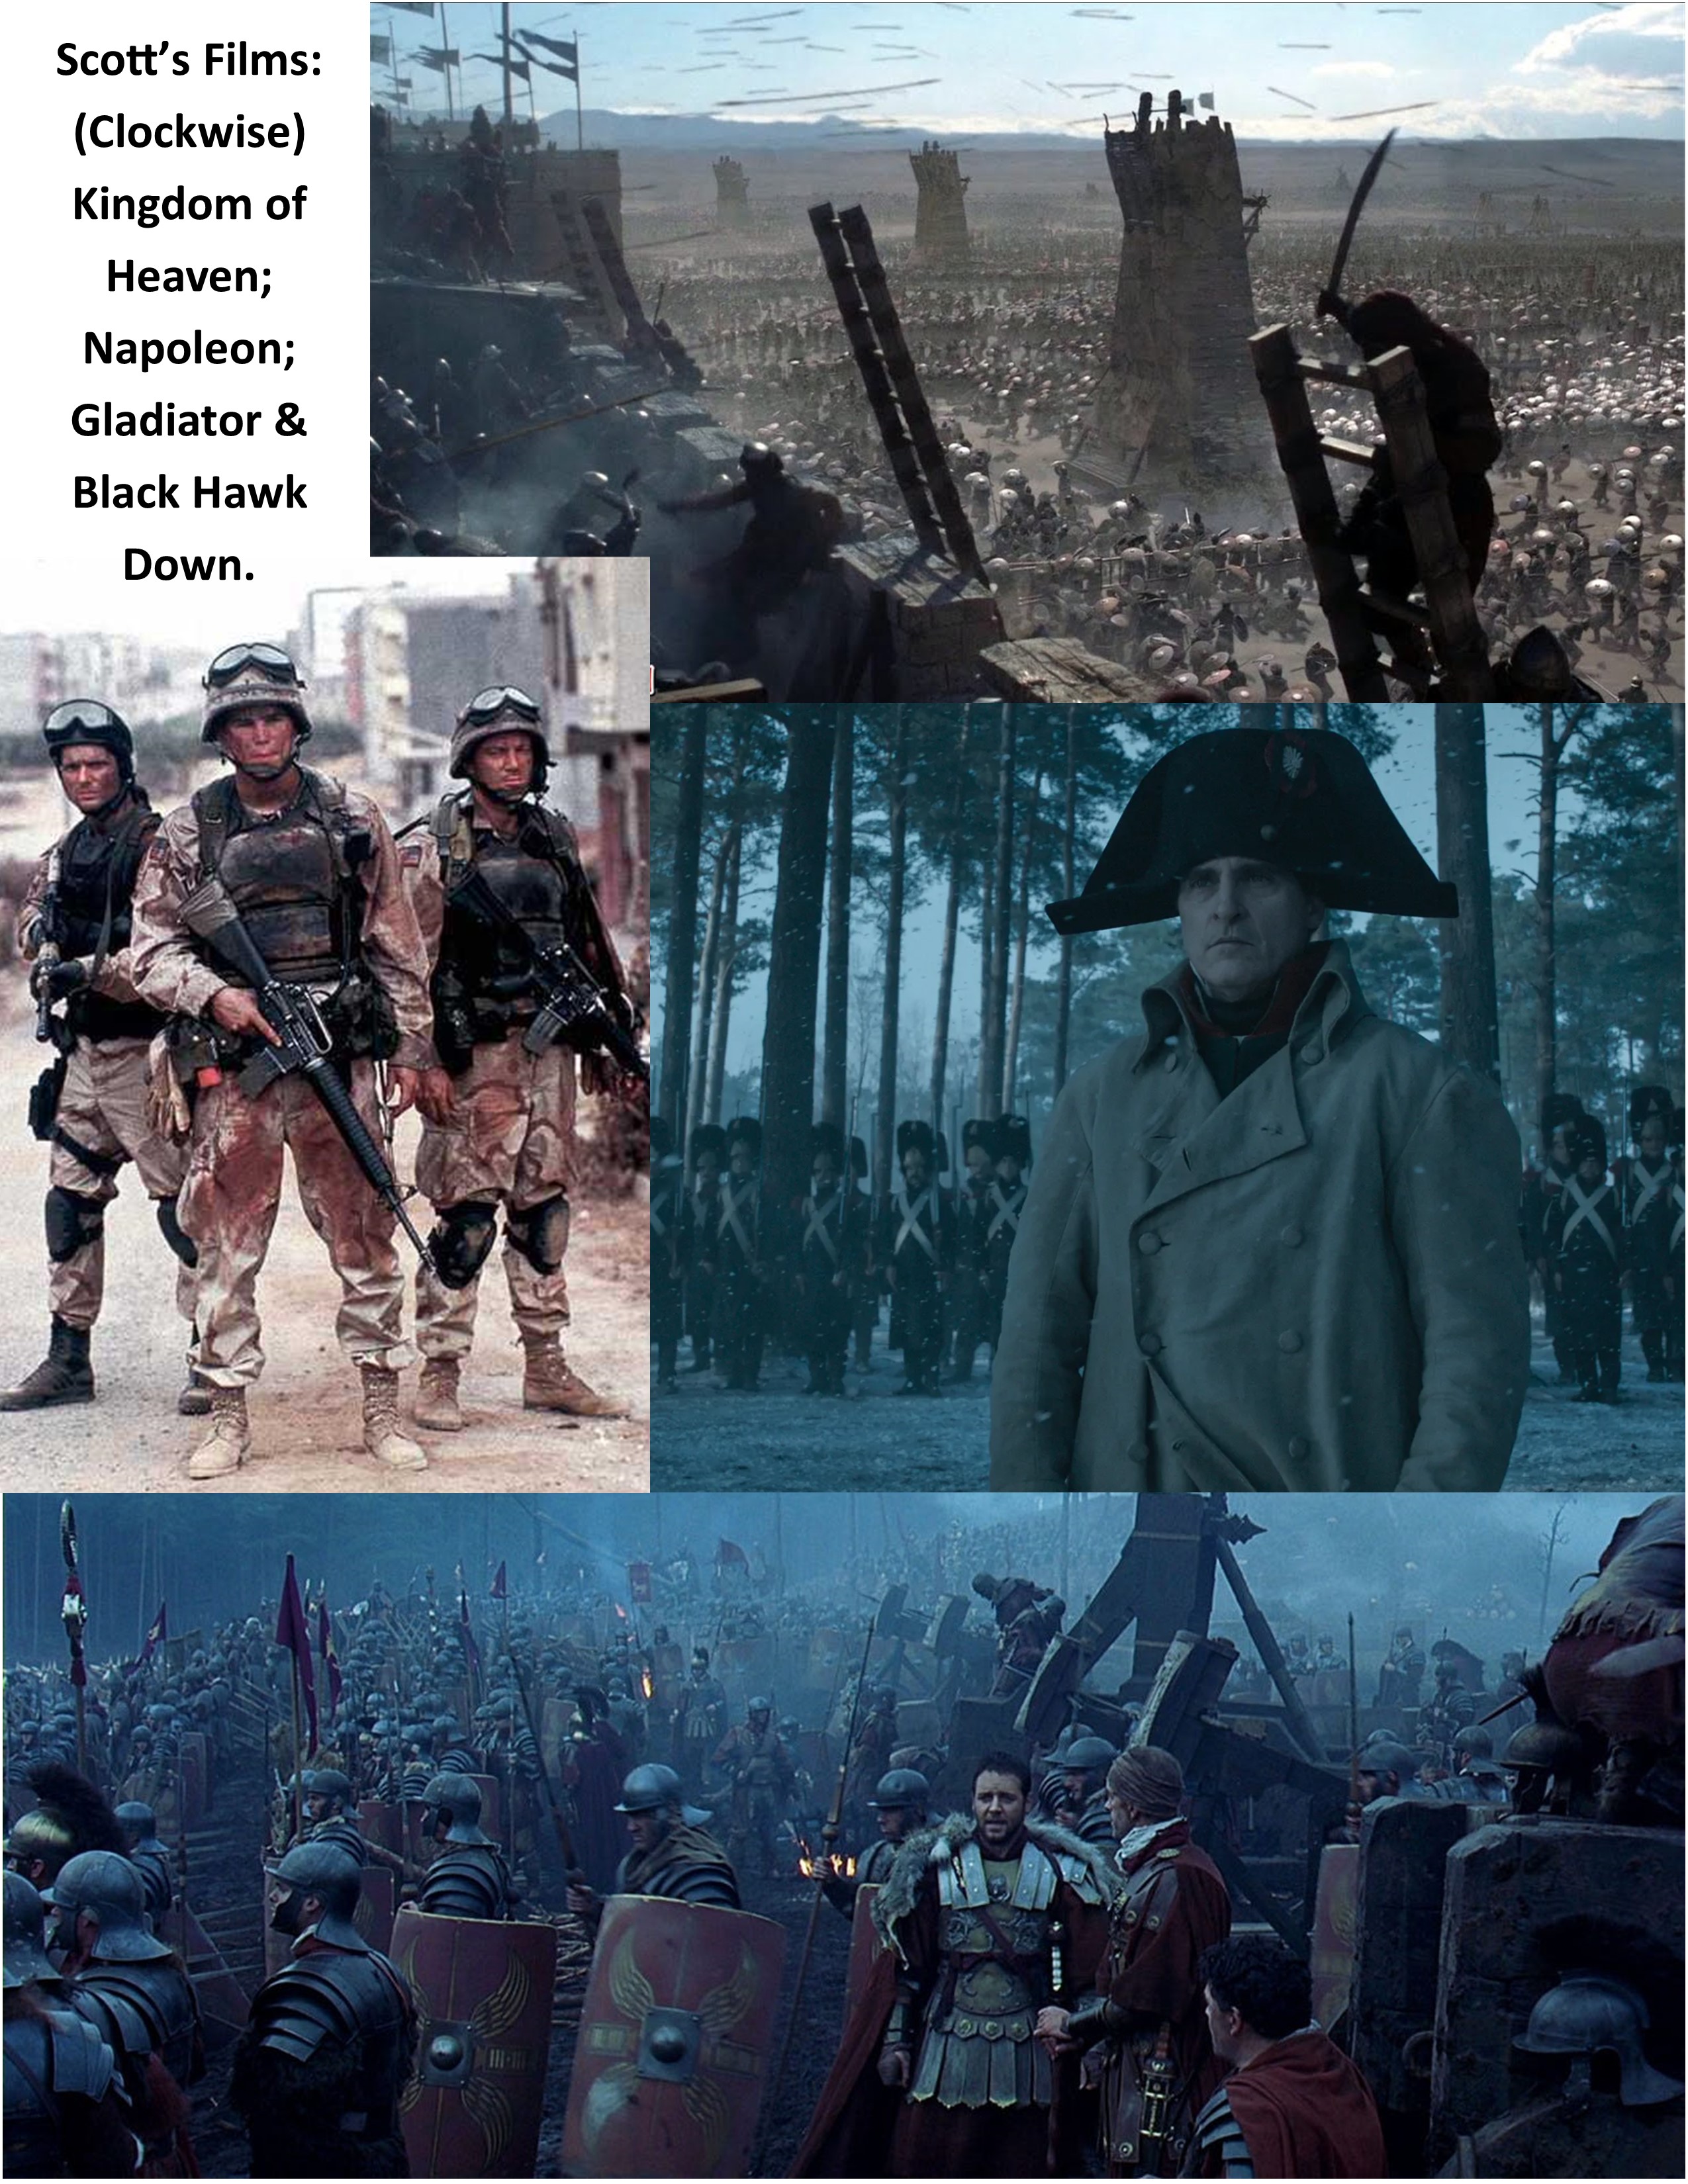 Movie Review: 'Napoleon' - Catholic Review